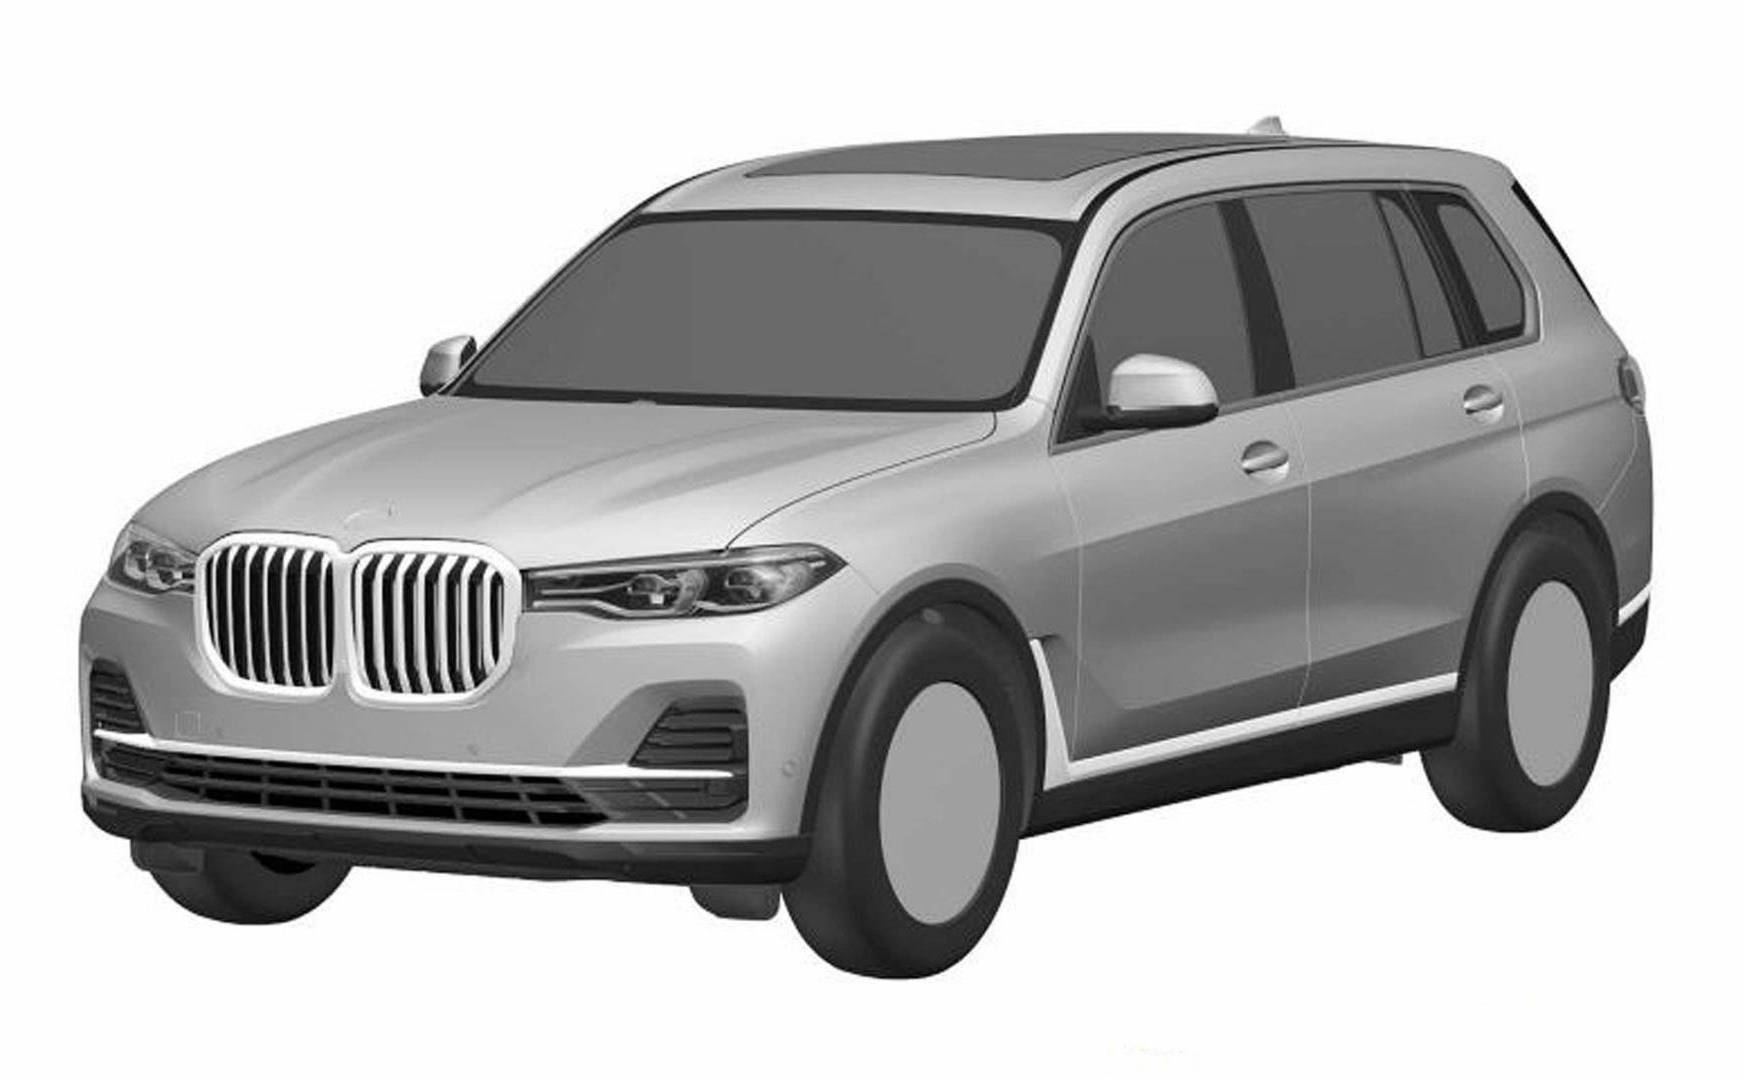 BMW X7 patent images surface, reveal production design